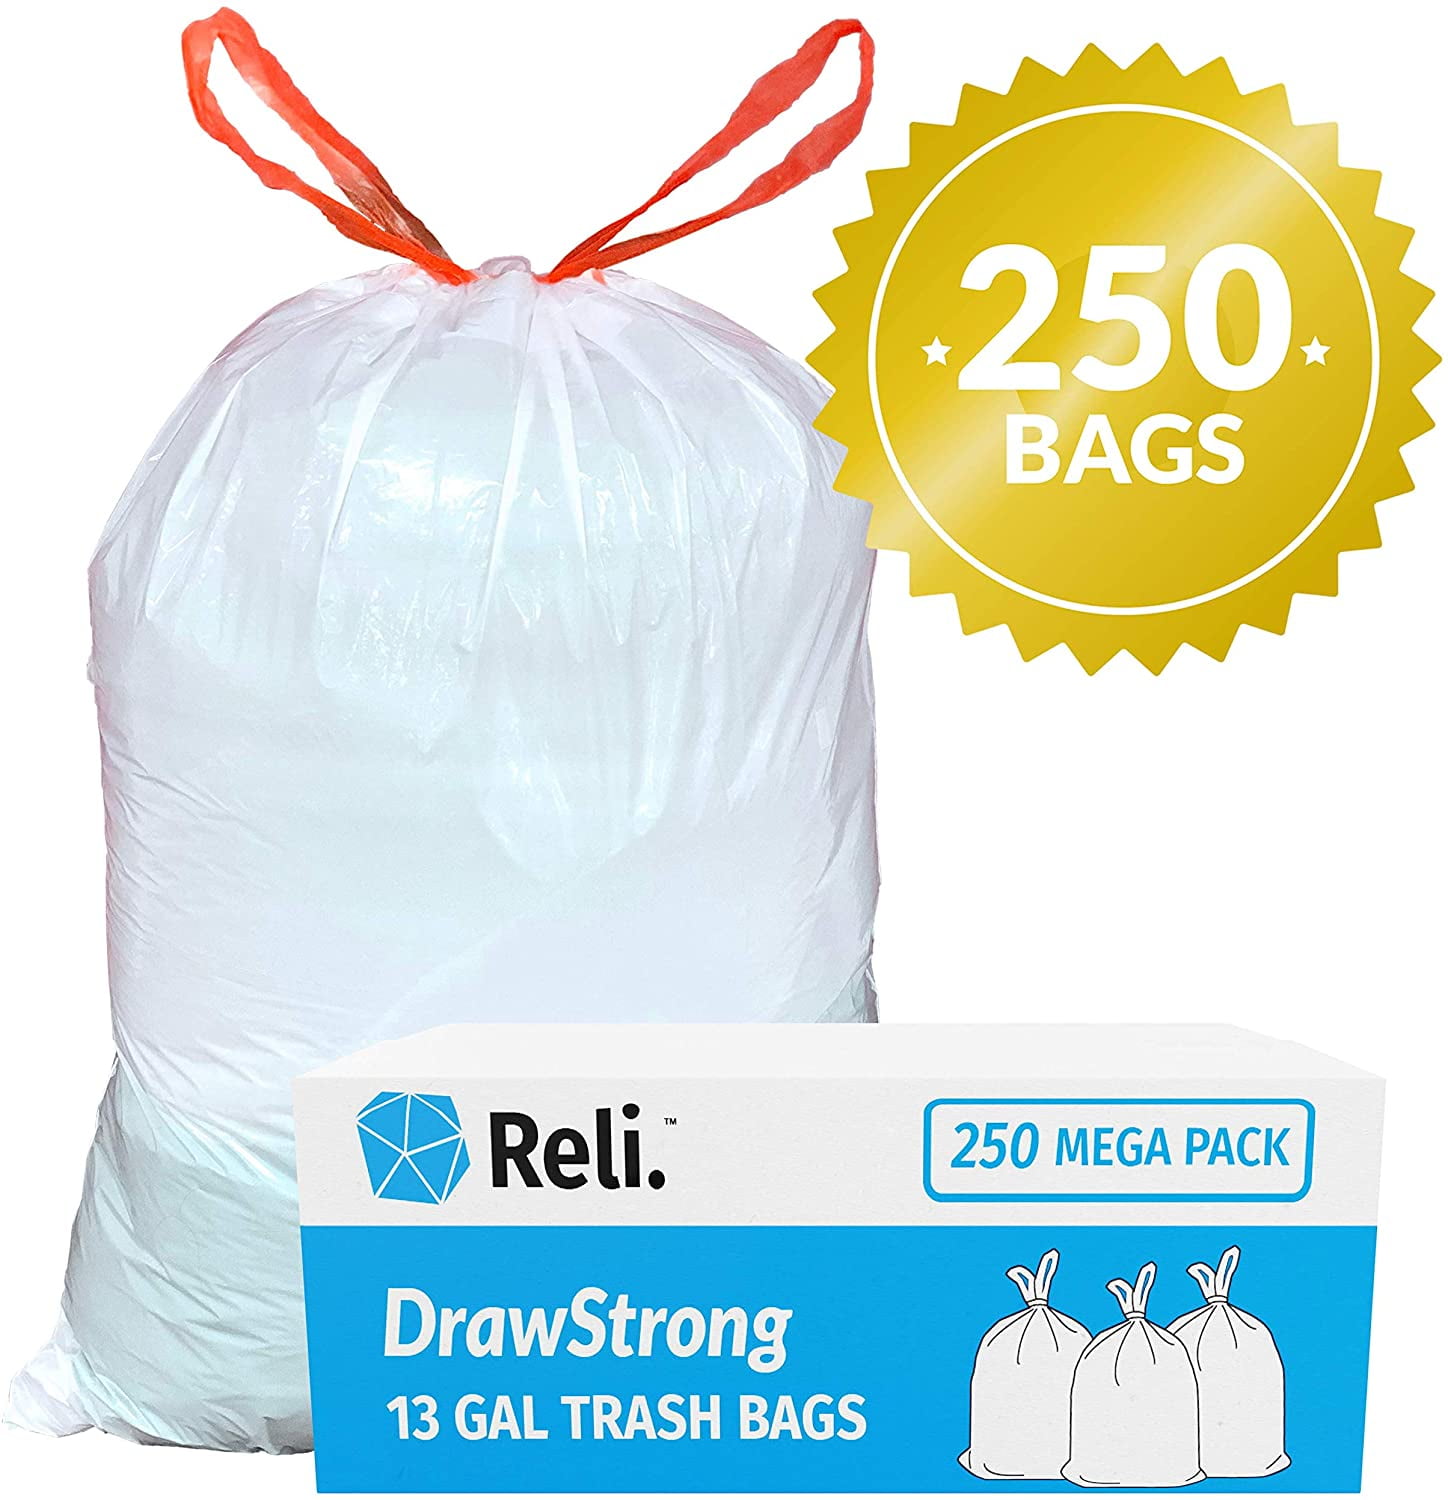 Hefty Tall Kitchen Bags, Drawstring, Strong, 13 Gallon, Mega Pack - 90 bags